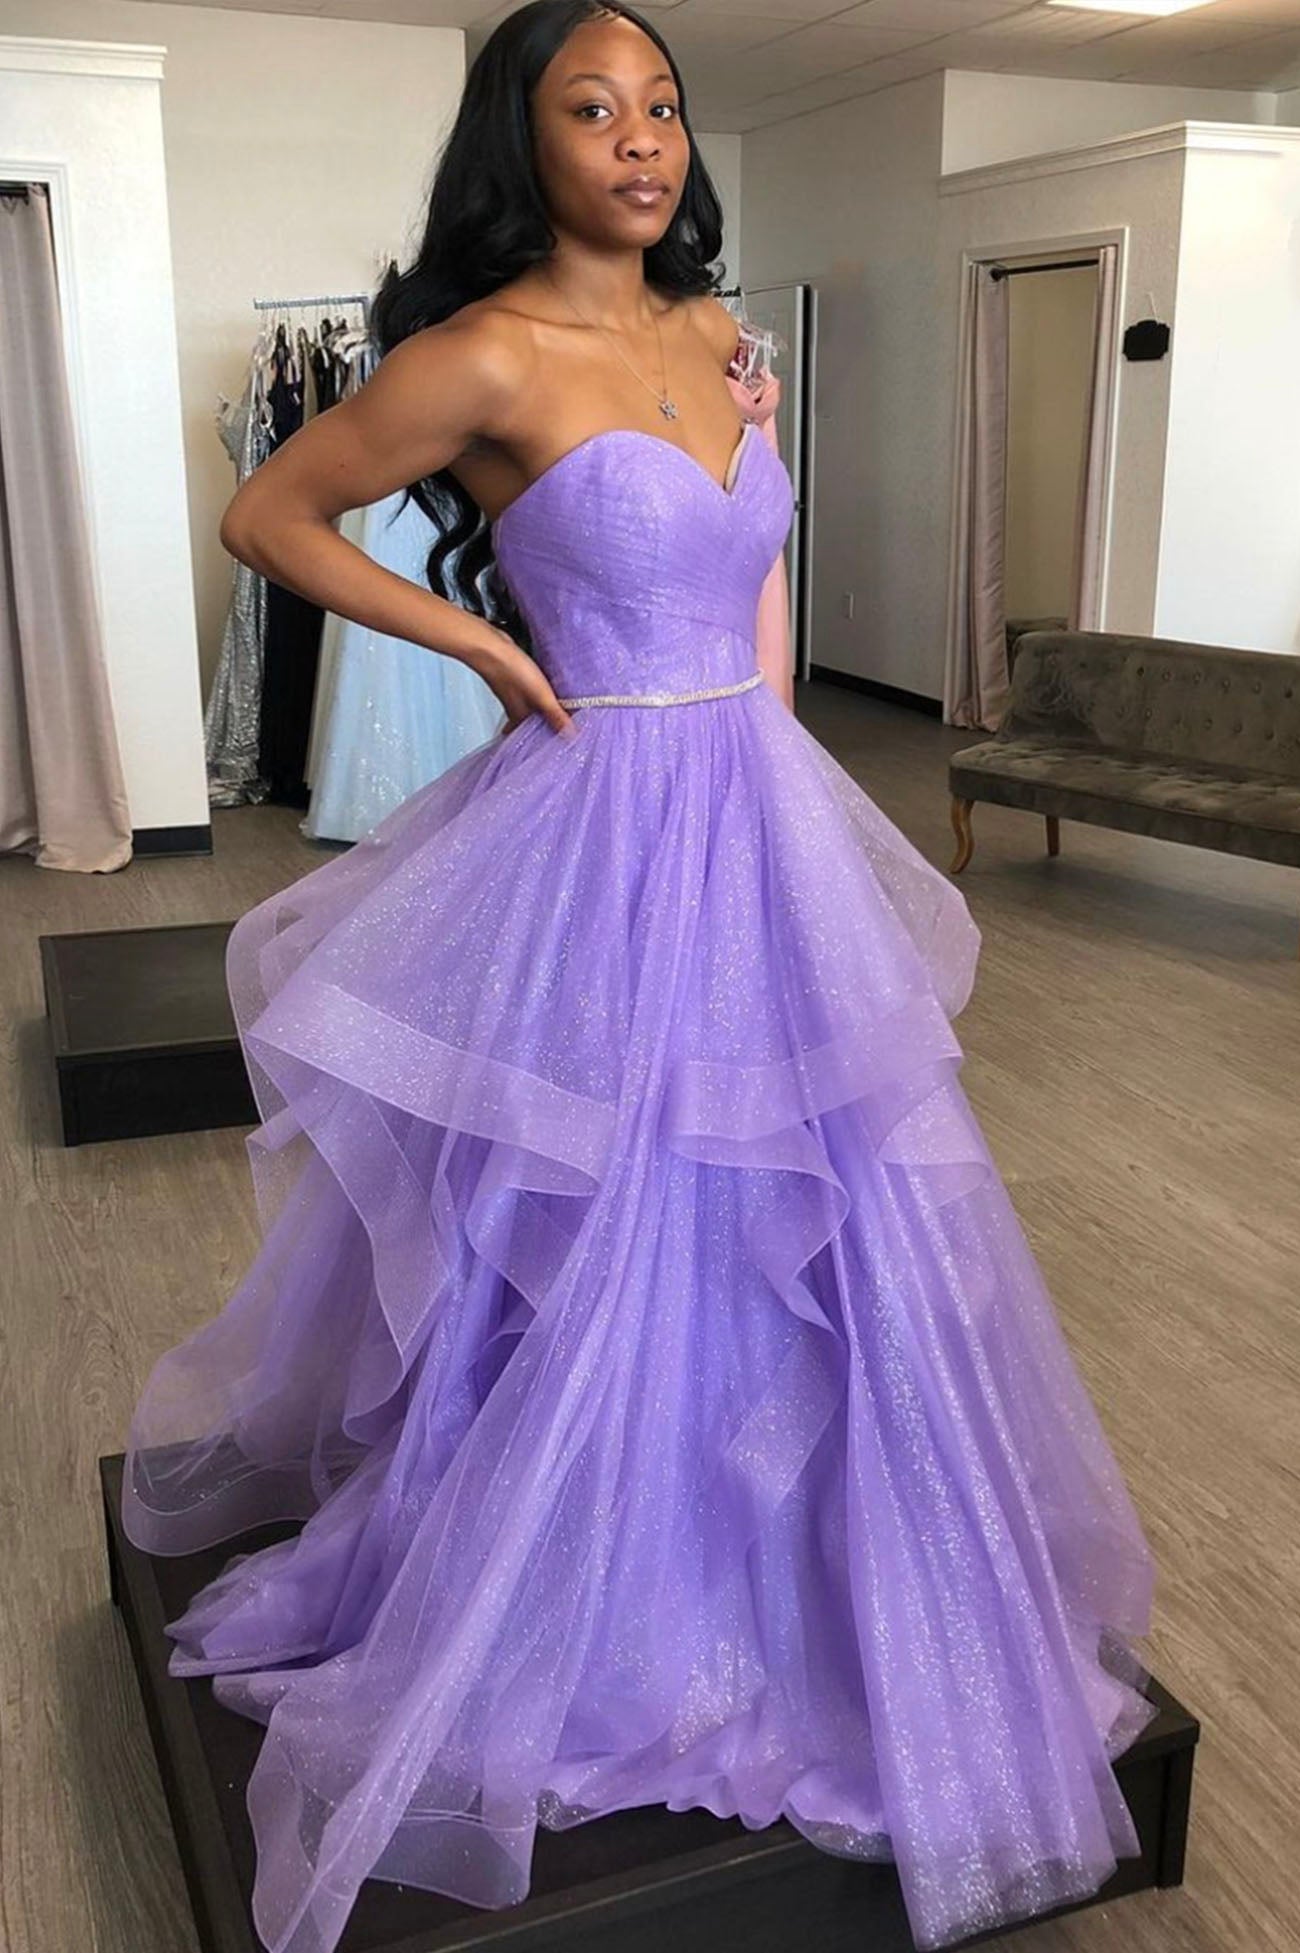 purple strapless dress